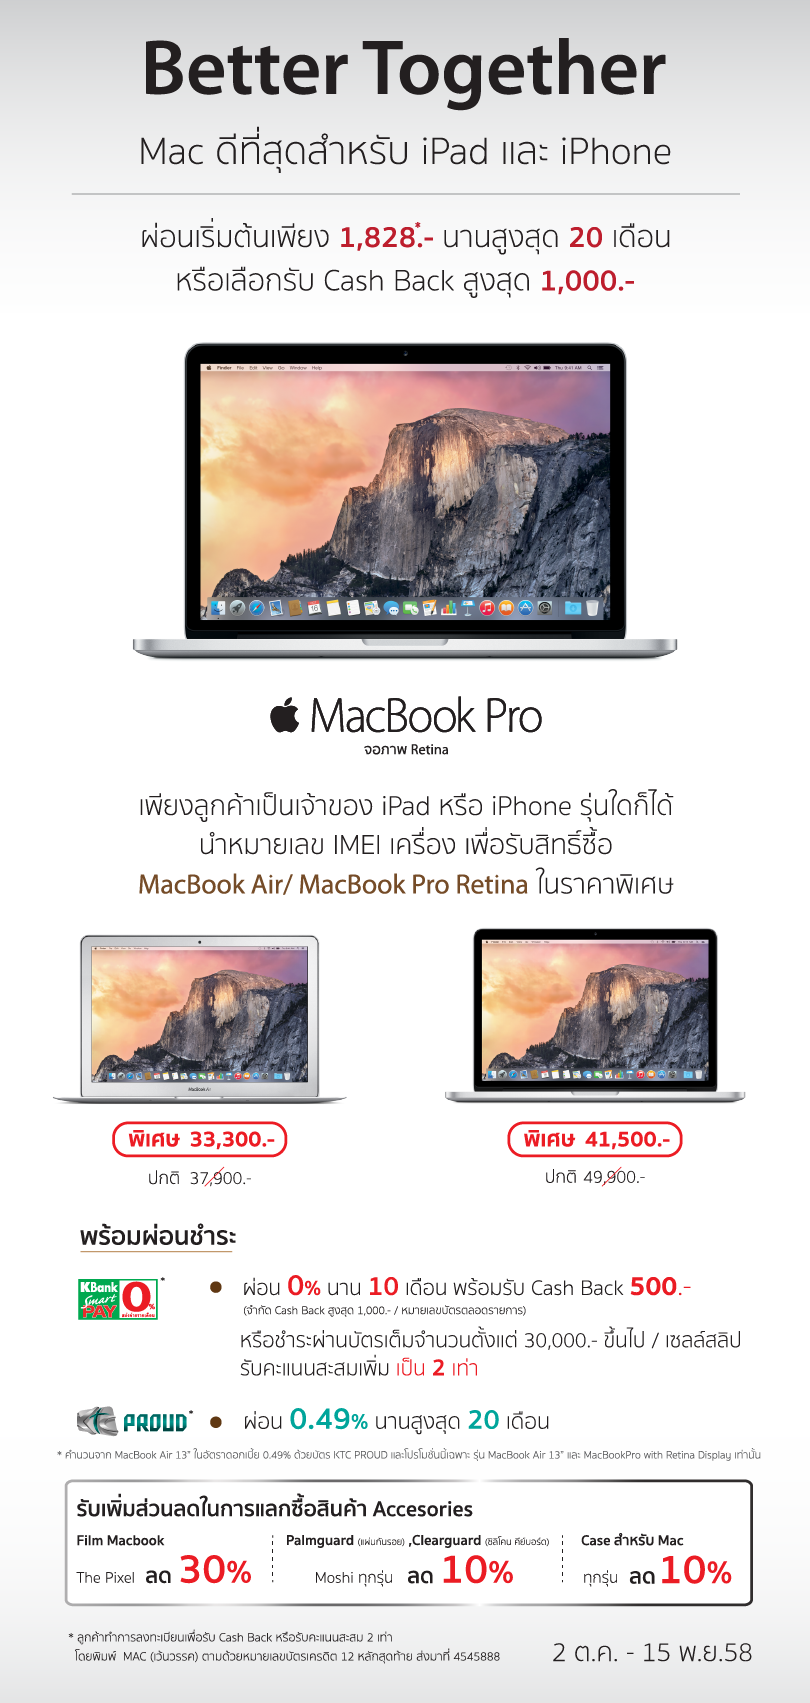 [PR] เป็นเจ้าของ MacBook ในราคาพิเศษ ลดสูงสุดถึง 8,400.- ที่ iStudio iBeat by comseven